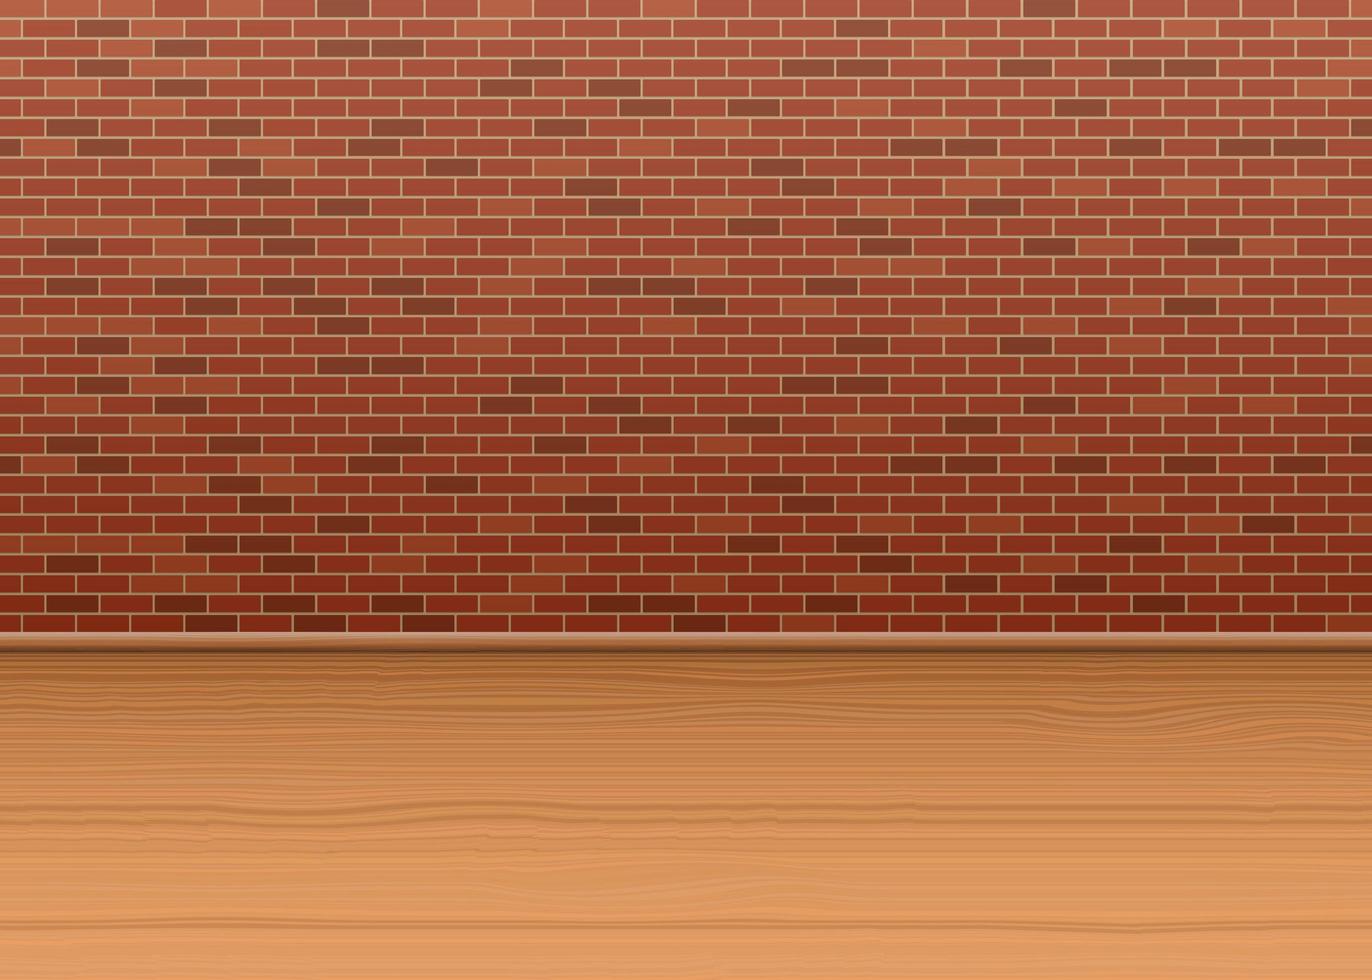 Brick wall and wooden floor  vector